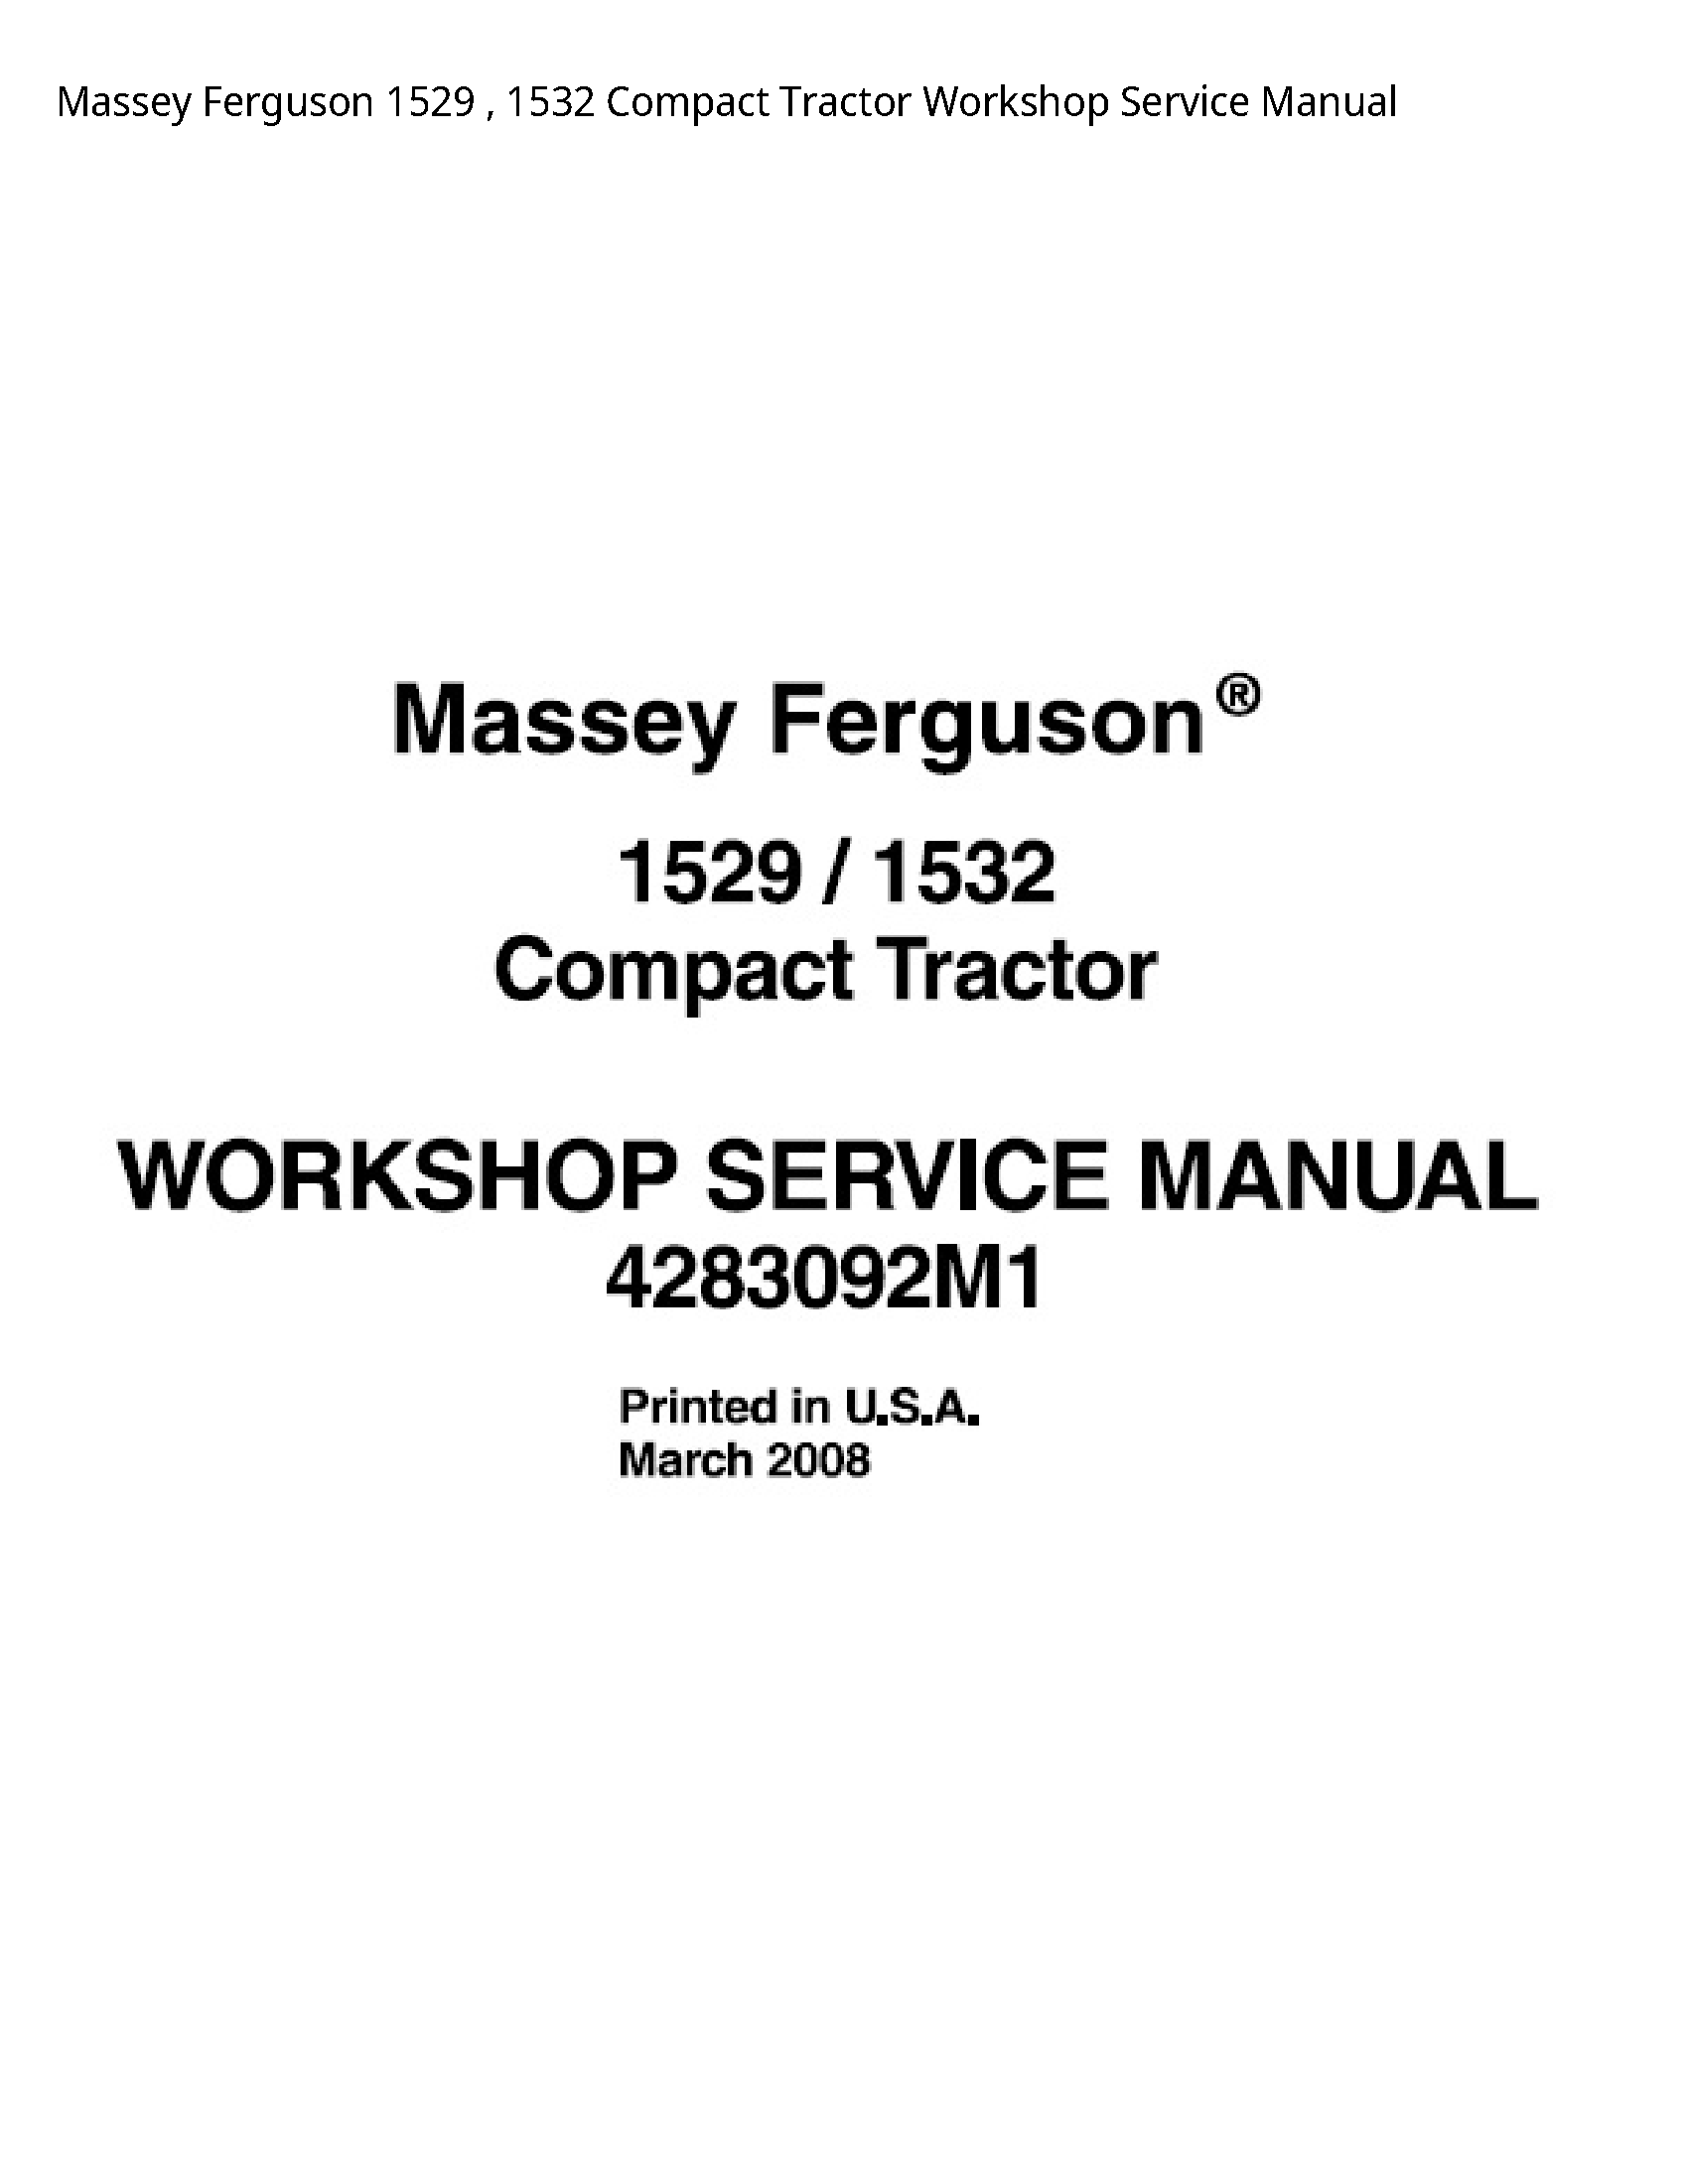 Massey Ferguson 1529 Compact Tractor Service manual